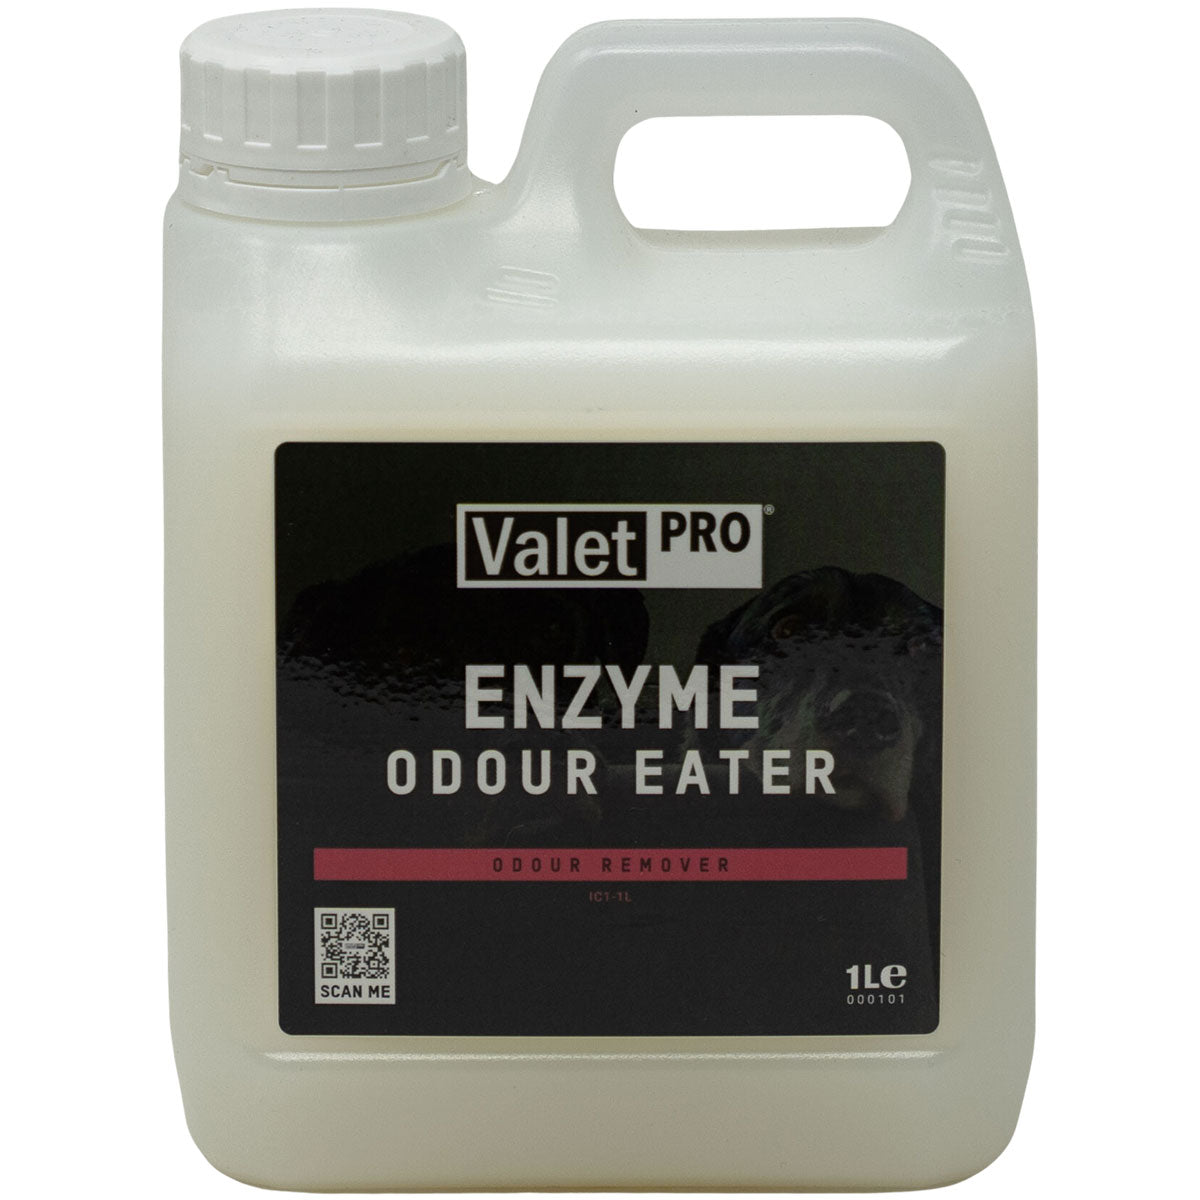 ValetPRO Enzyme Odour Eater 1 Litre